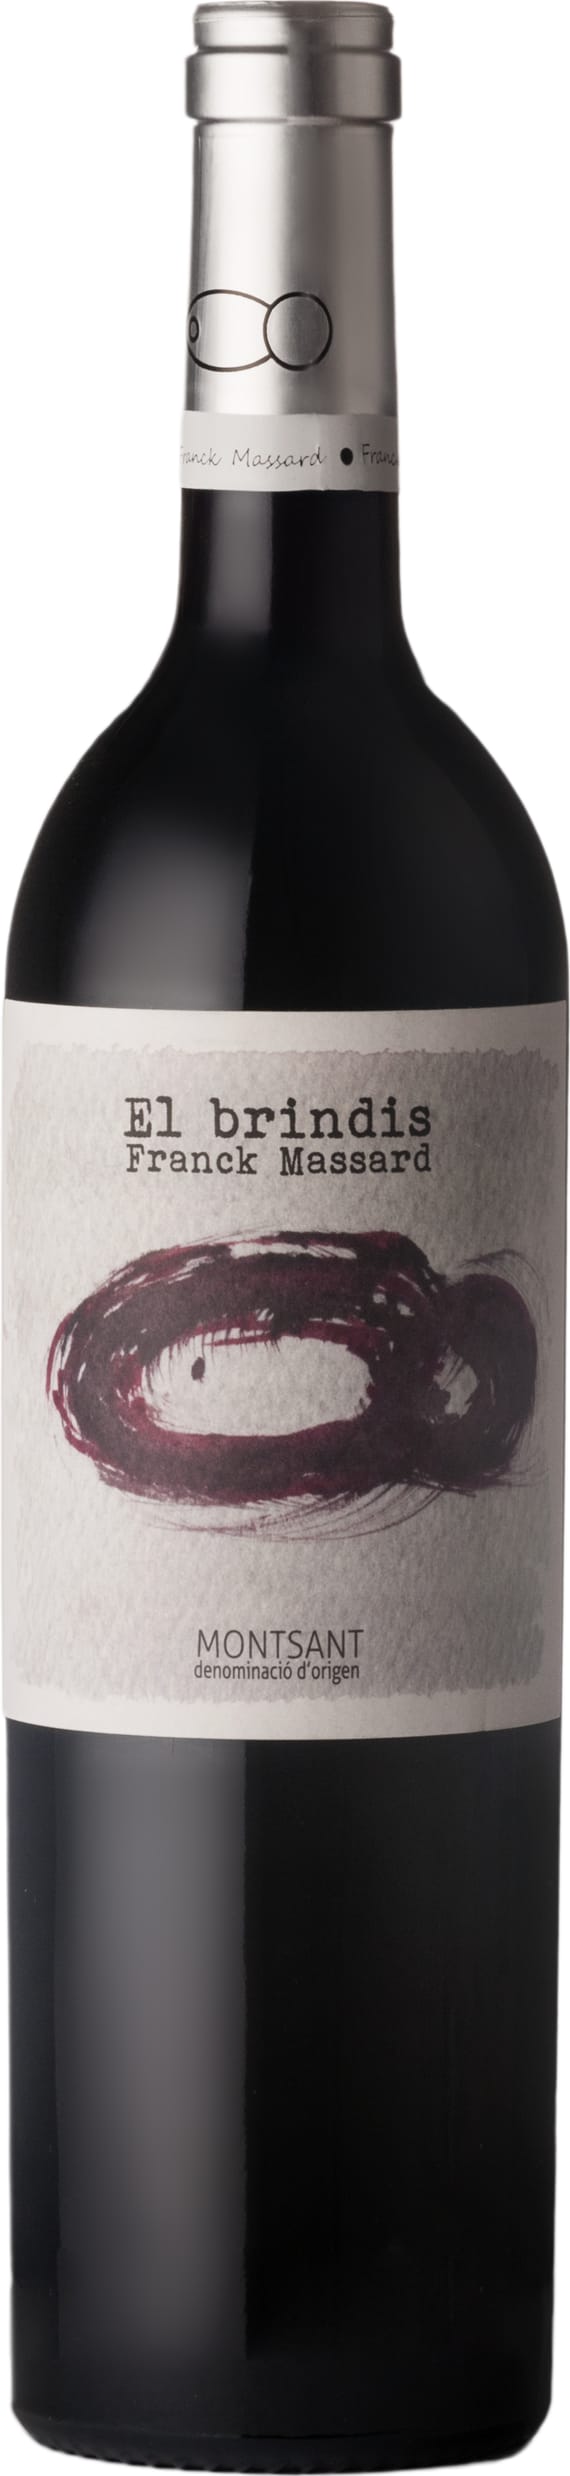 Franck Massard El Brindis Montsant 2020 75cl - Buy Franck Massard Wines from GREAT WINES DIRECT wine shop